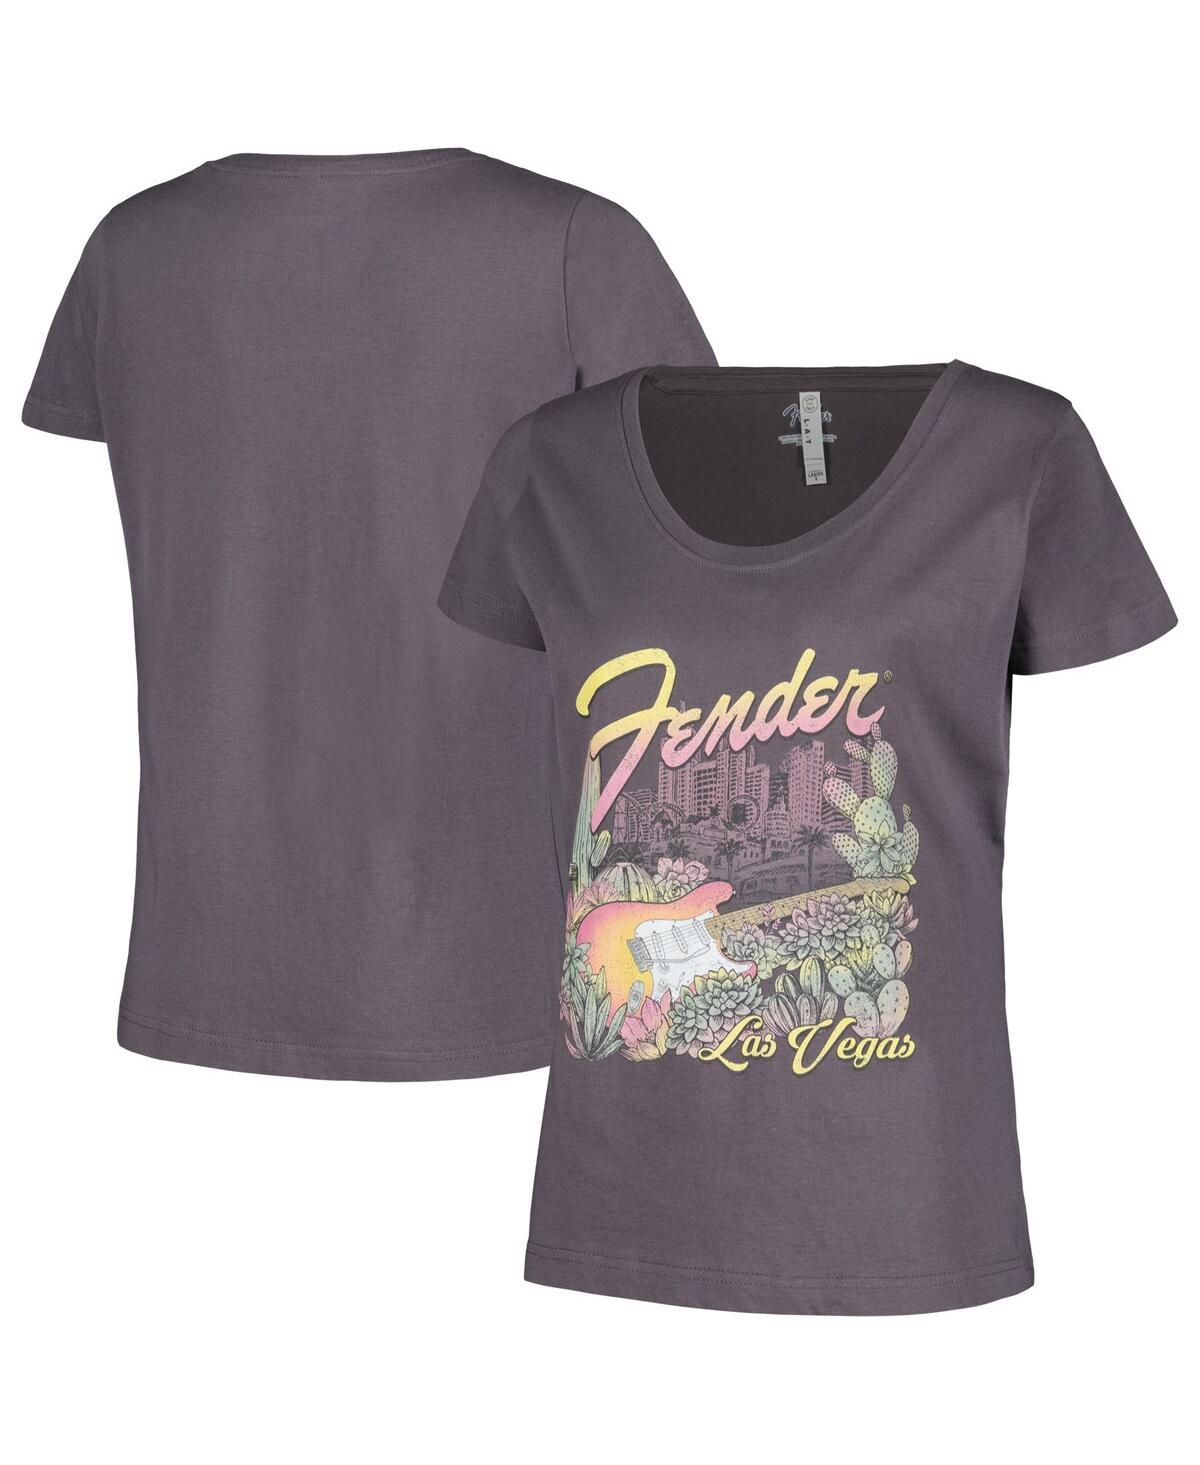 Women's Charcoal Fender Las Vegas Scoop Neck T-shirt - Charcoal